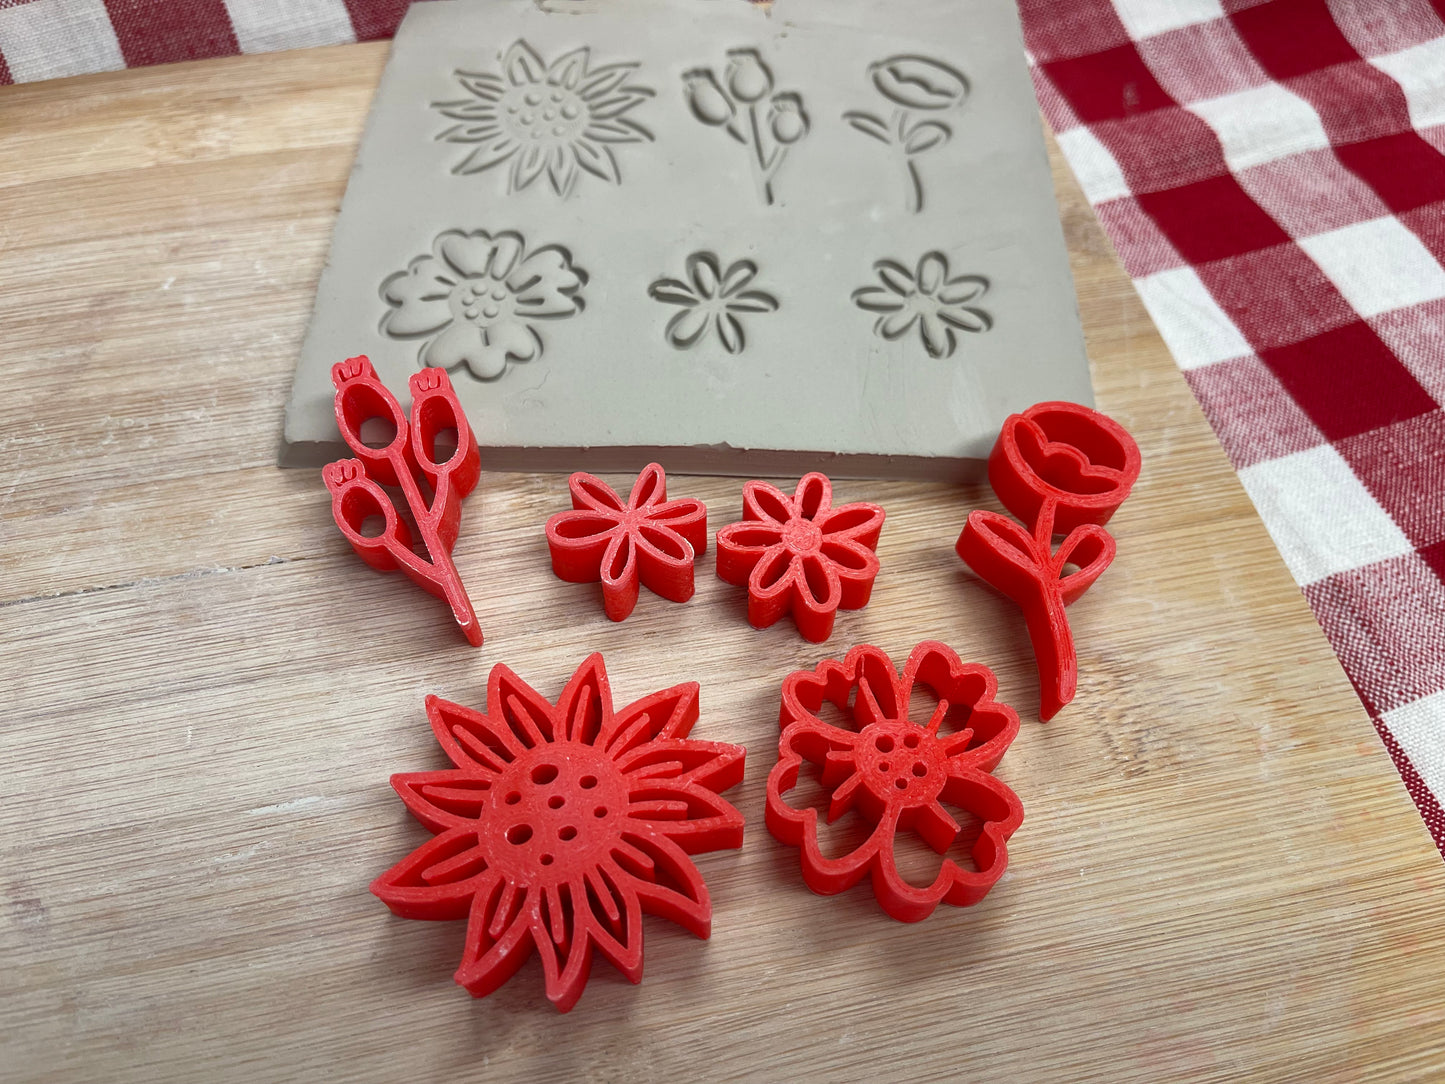 Autumn Elements Stamp Series - Mini Flowers design set of 6, plastic 3D printed, Pottery Tool